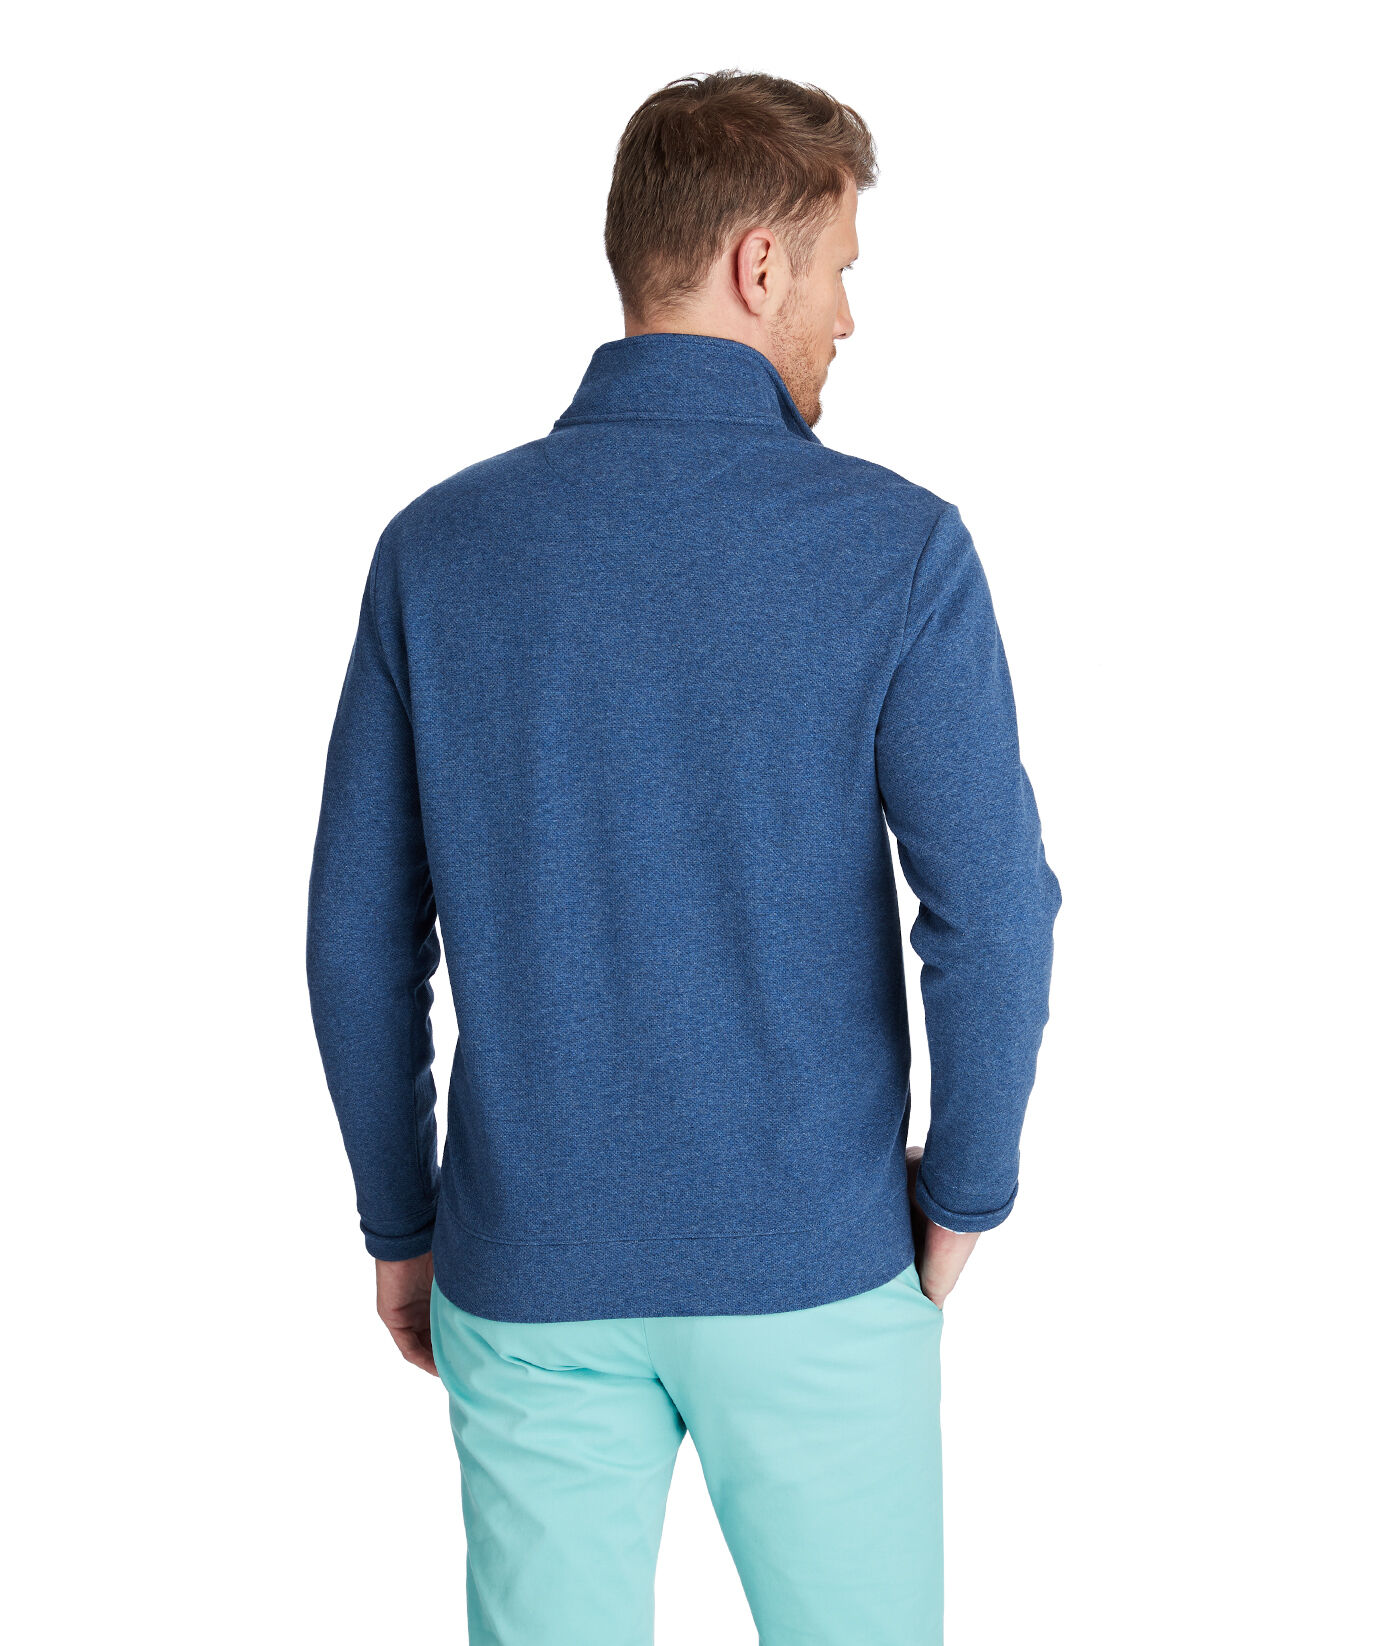 Vineyard Vines Men's Sweater Fleece 1/2 Zip Pullover Deep Bay Blue Shep Shirt 